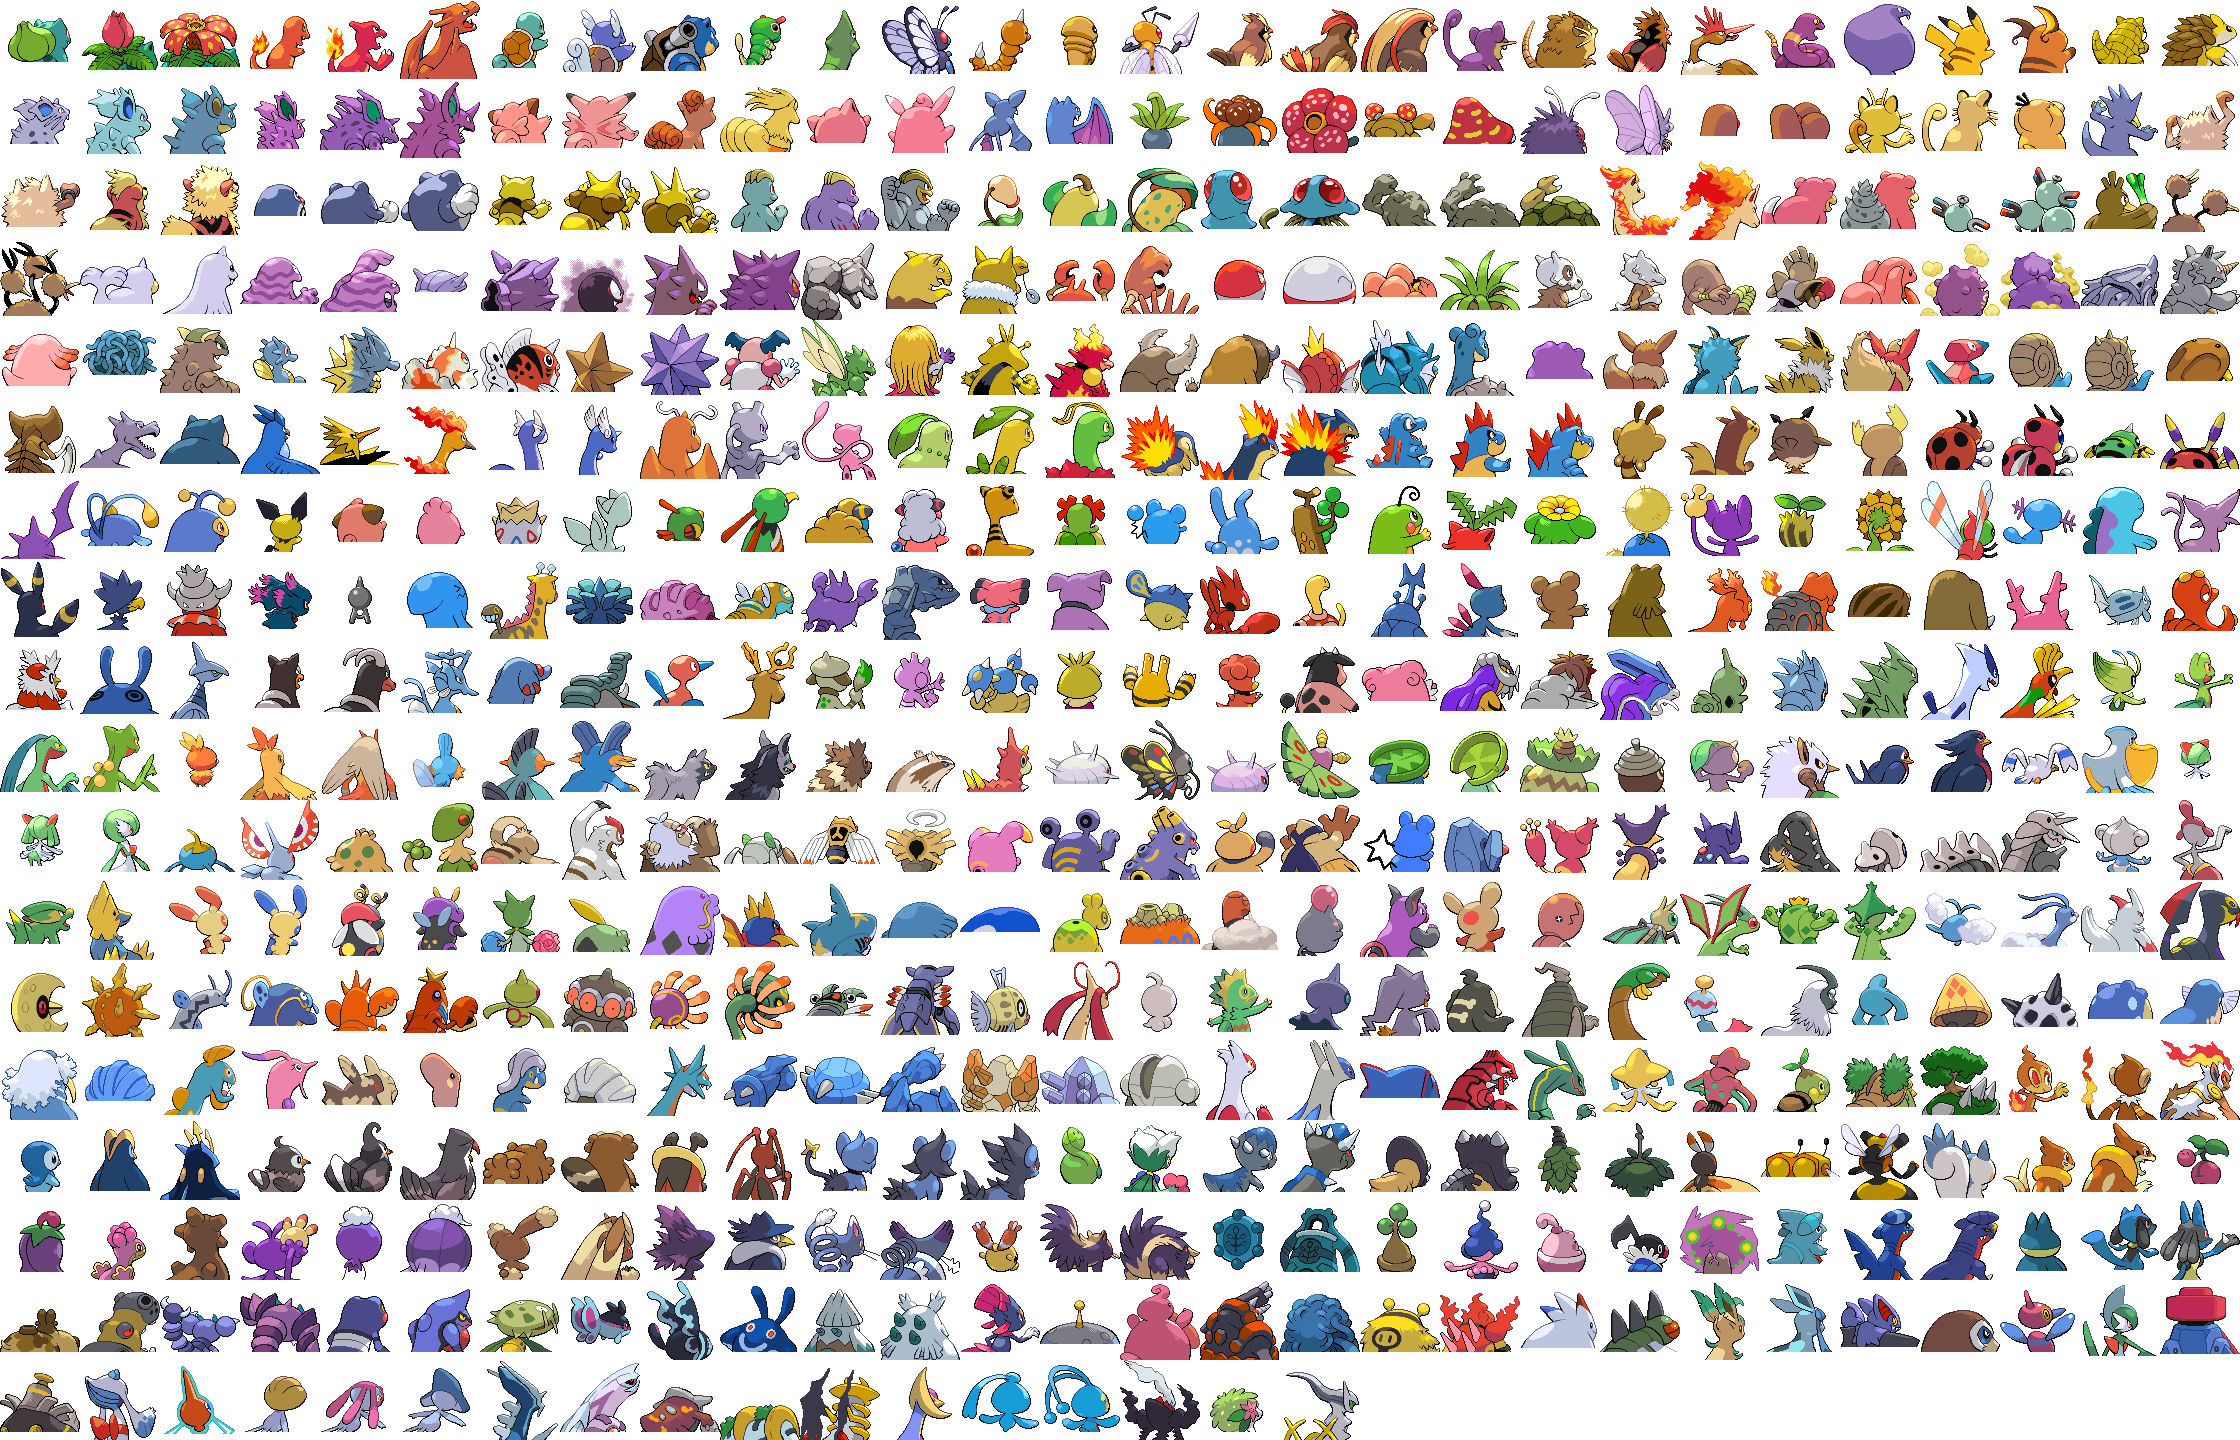 Full Sheet View - Pokemon Diamond / Pearl - Pokemon #387-493